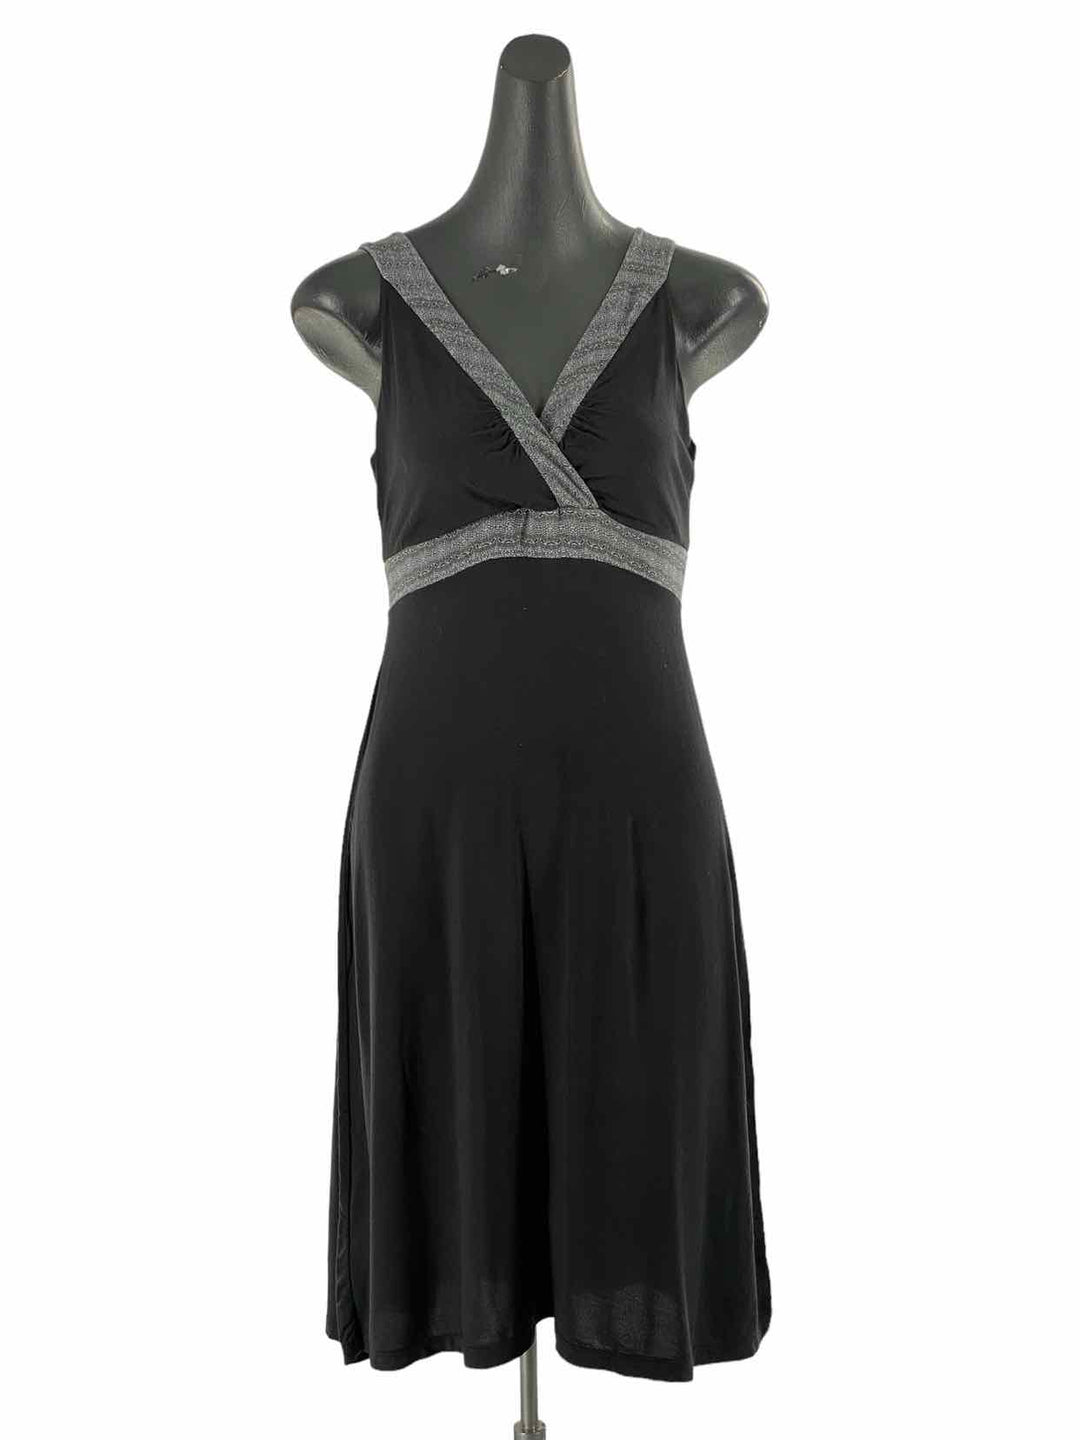 Adventura Size S Black Grey Dress